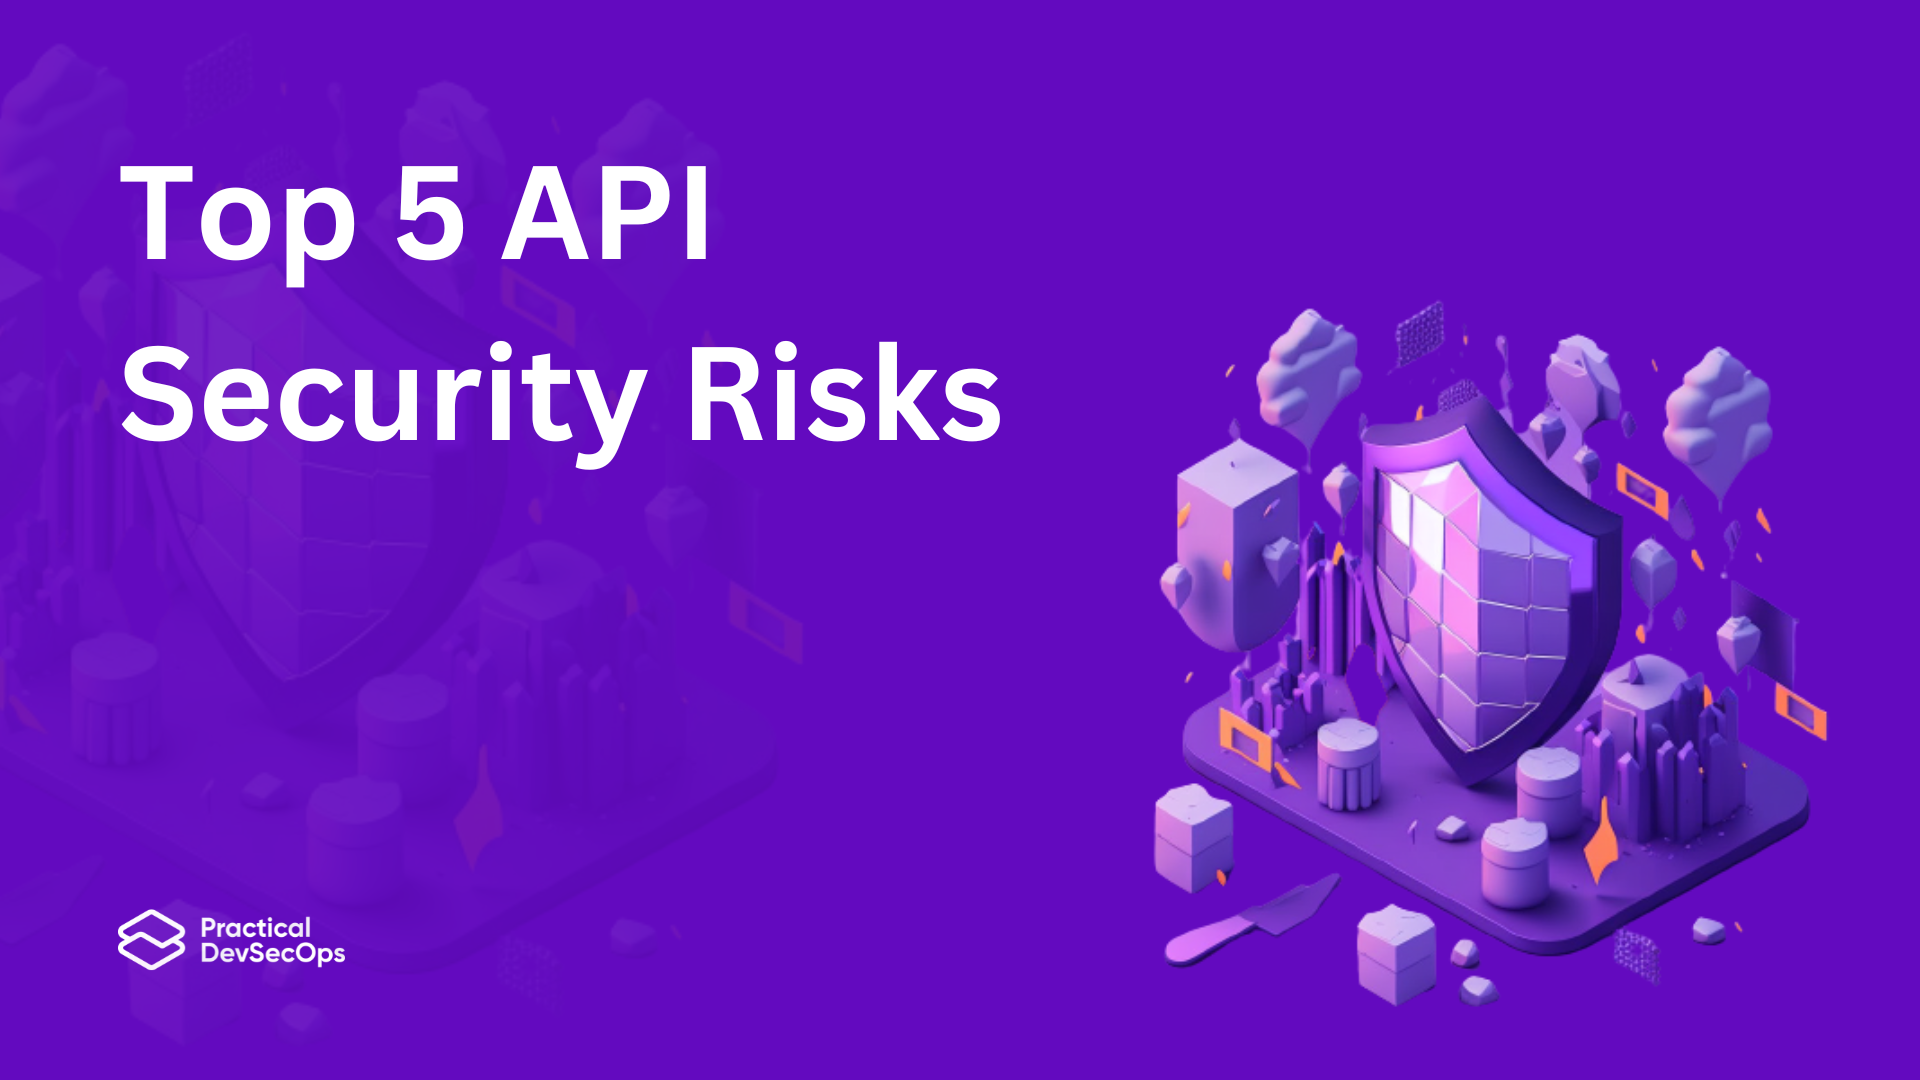 Top 5 API Security Risks in 2023